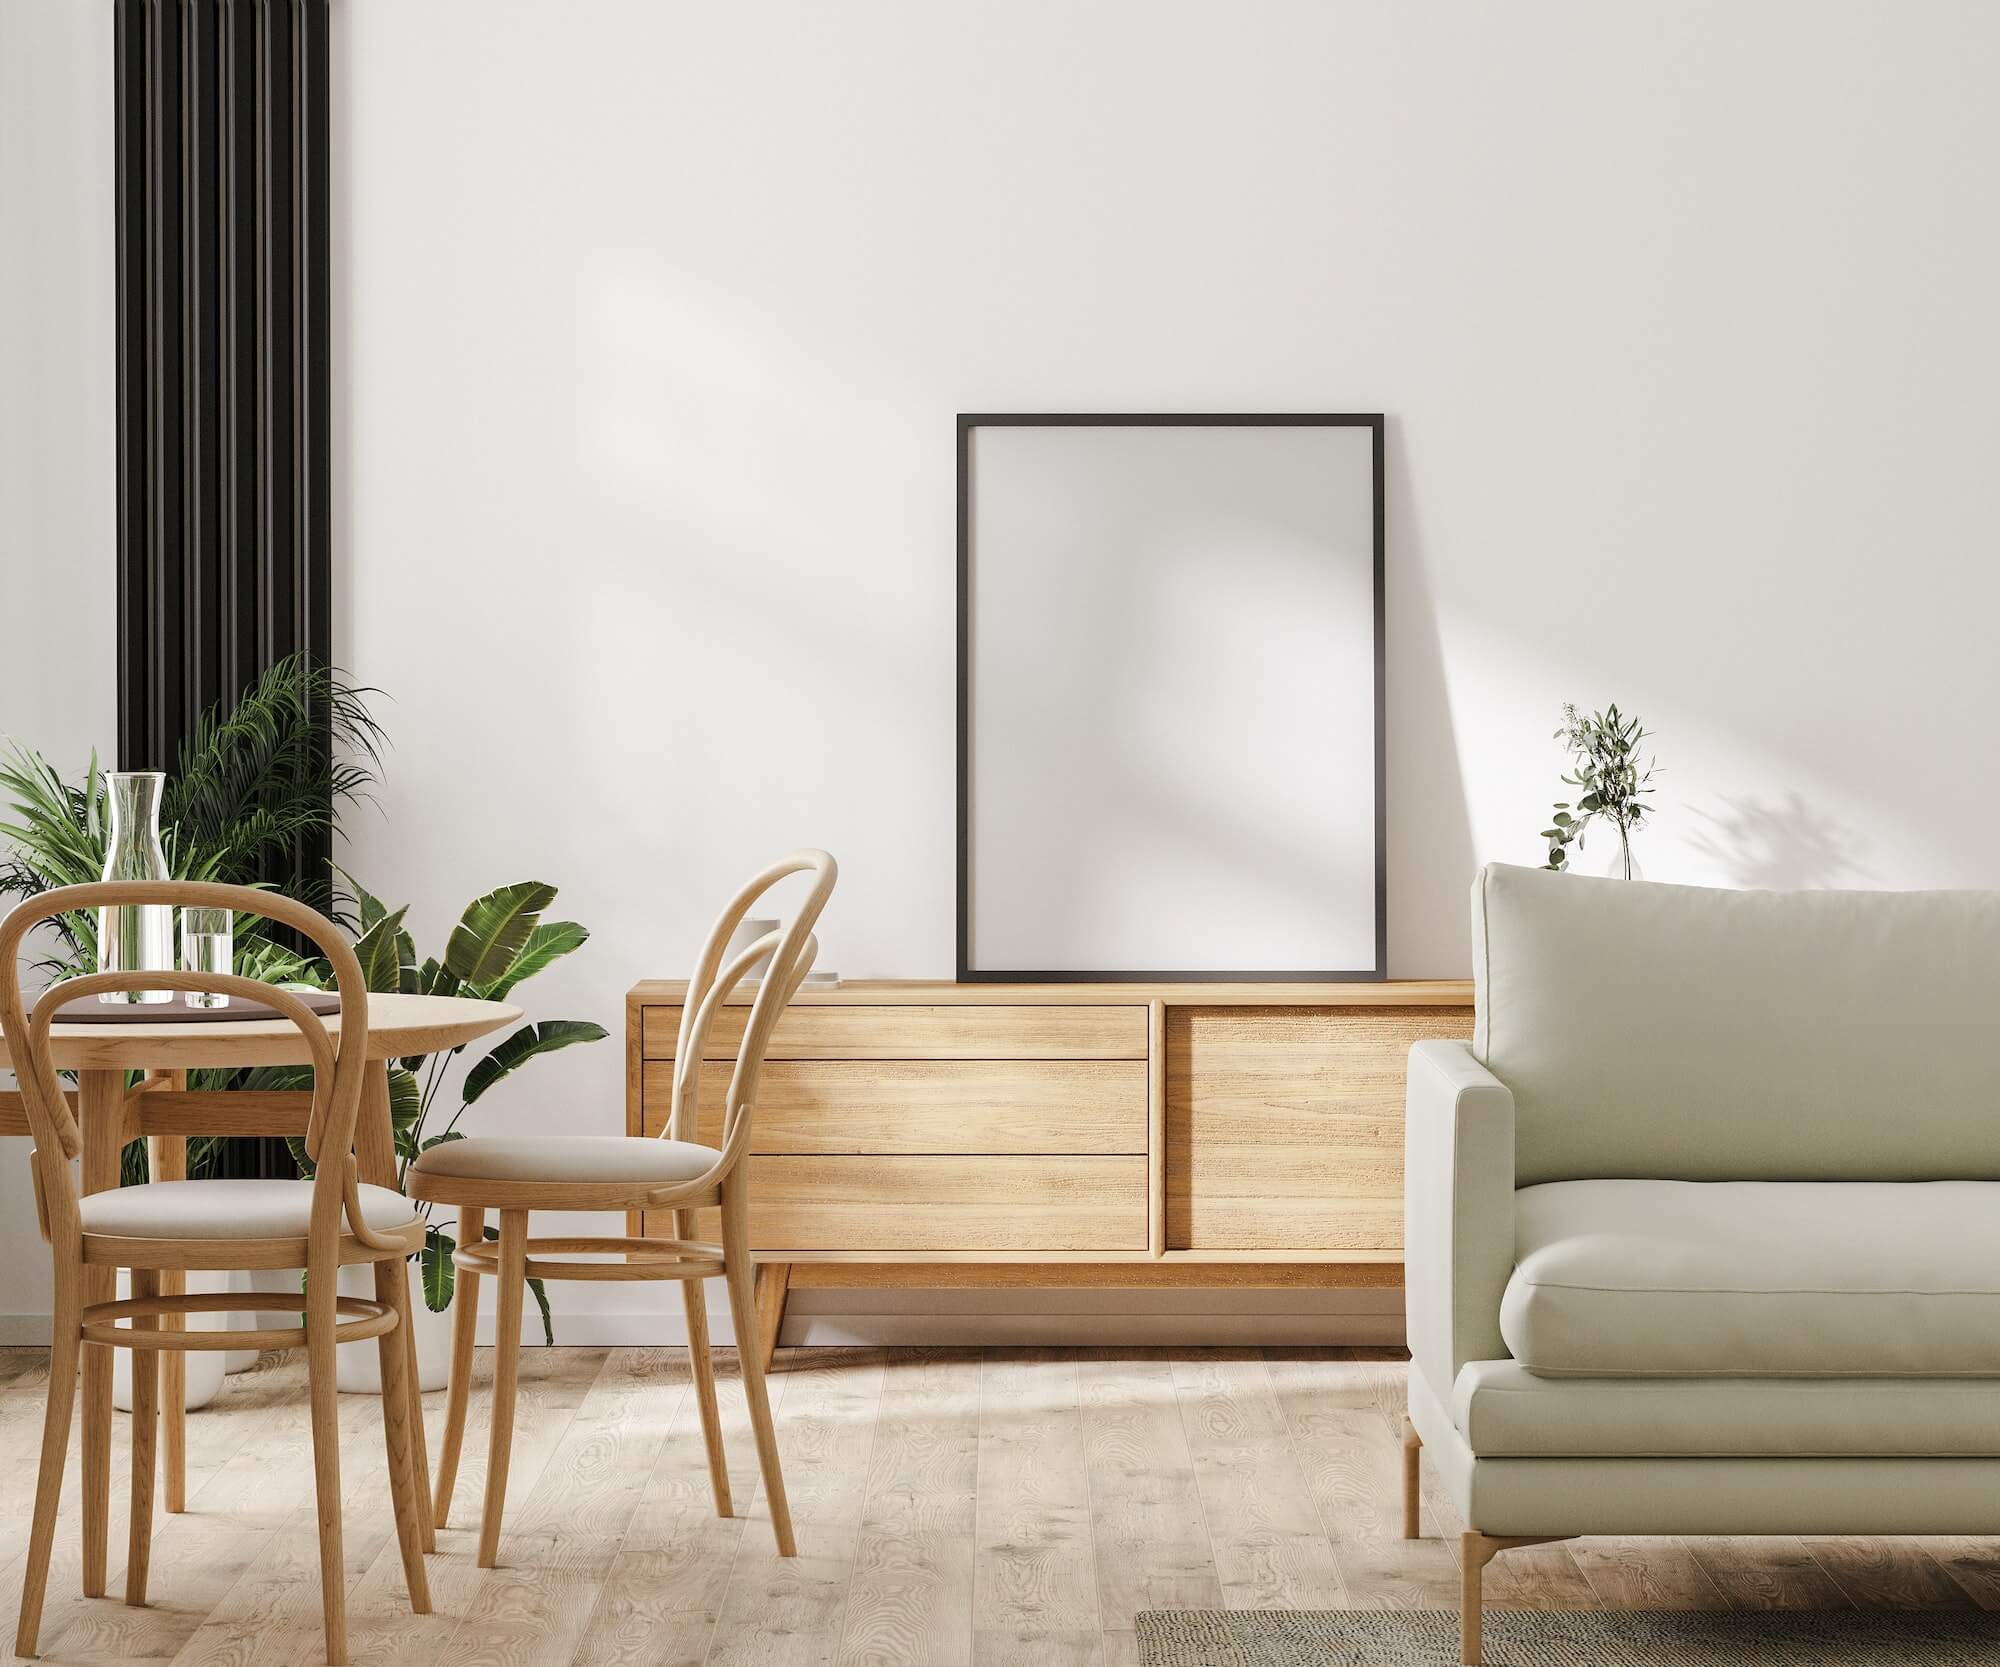 modern-living-room-with-furniture-and-poster-frame-mockup-home-interior-design-3d-rendering-1.jpg